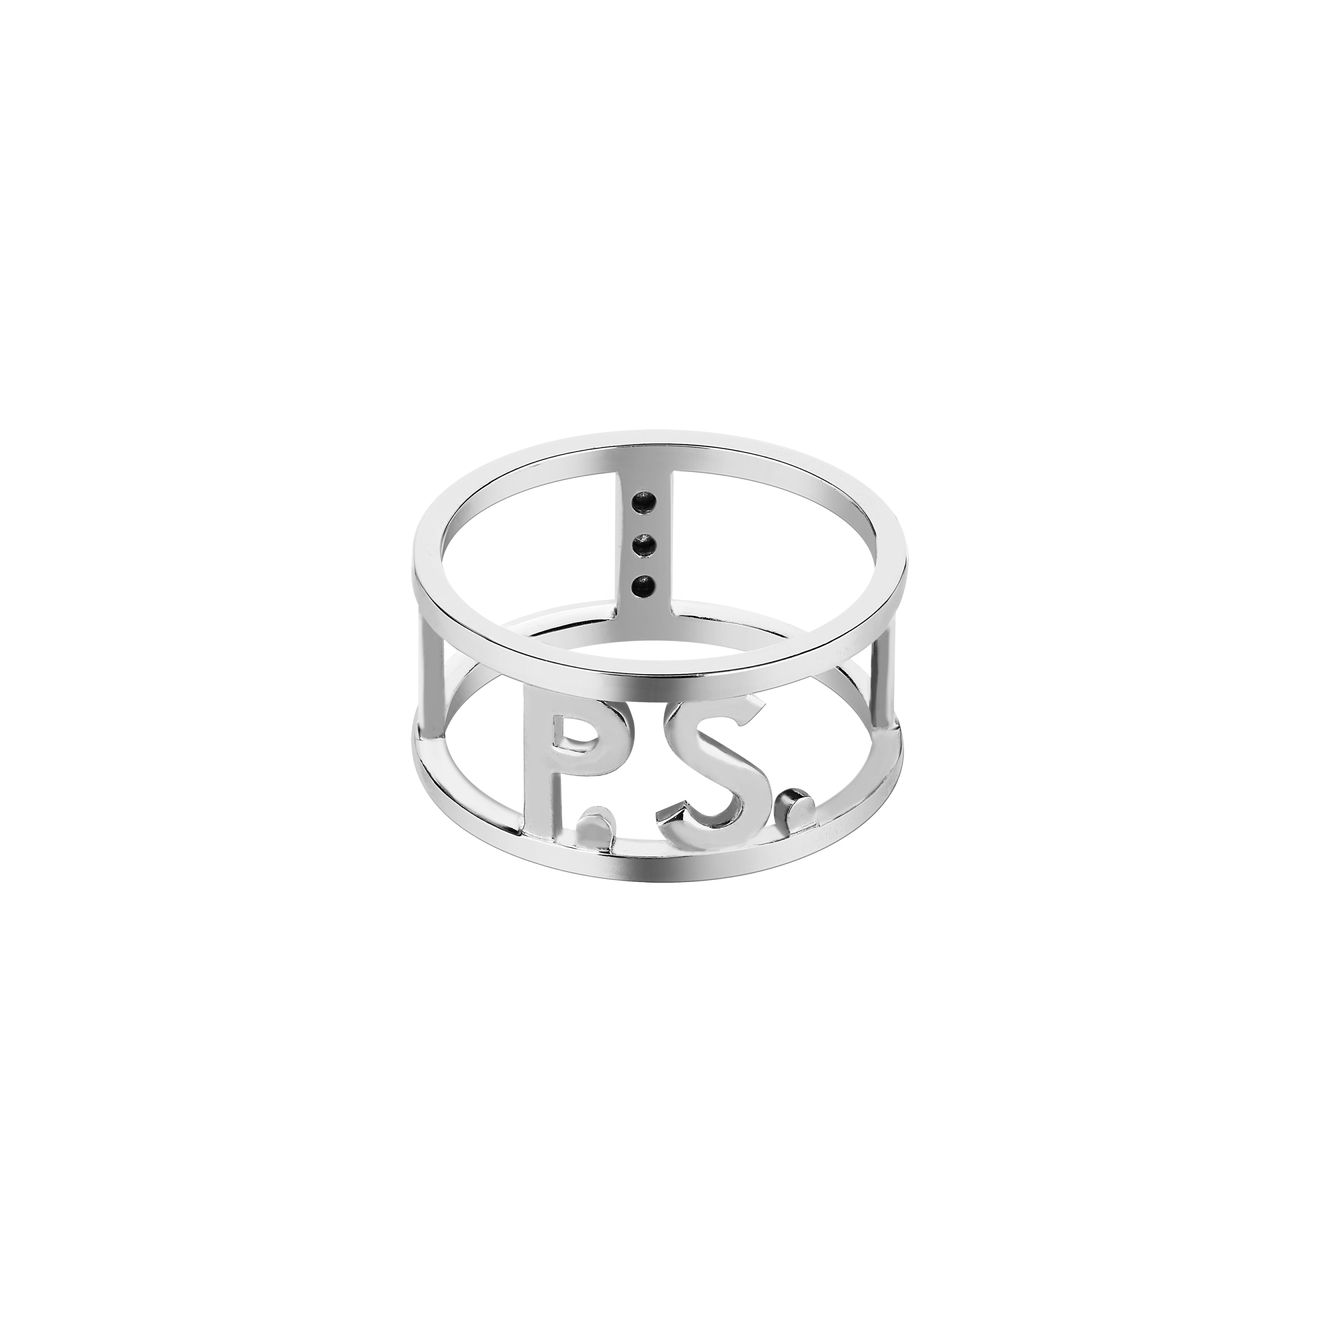 Phenomenal Studio Родированное кольцо с кристаллами и фирменным знаком P.S. Ring Rhodium кольцо phenomenal studio wishful ring 17 17 5